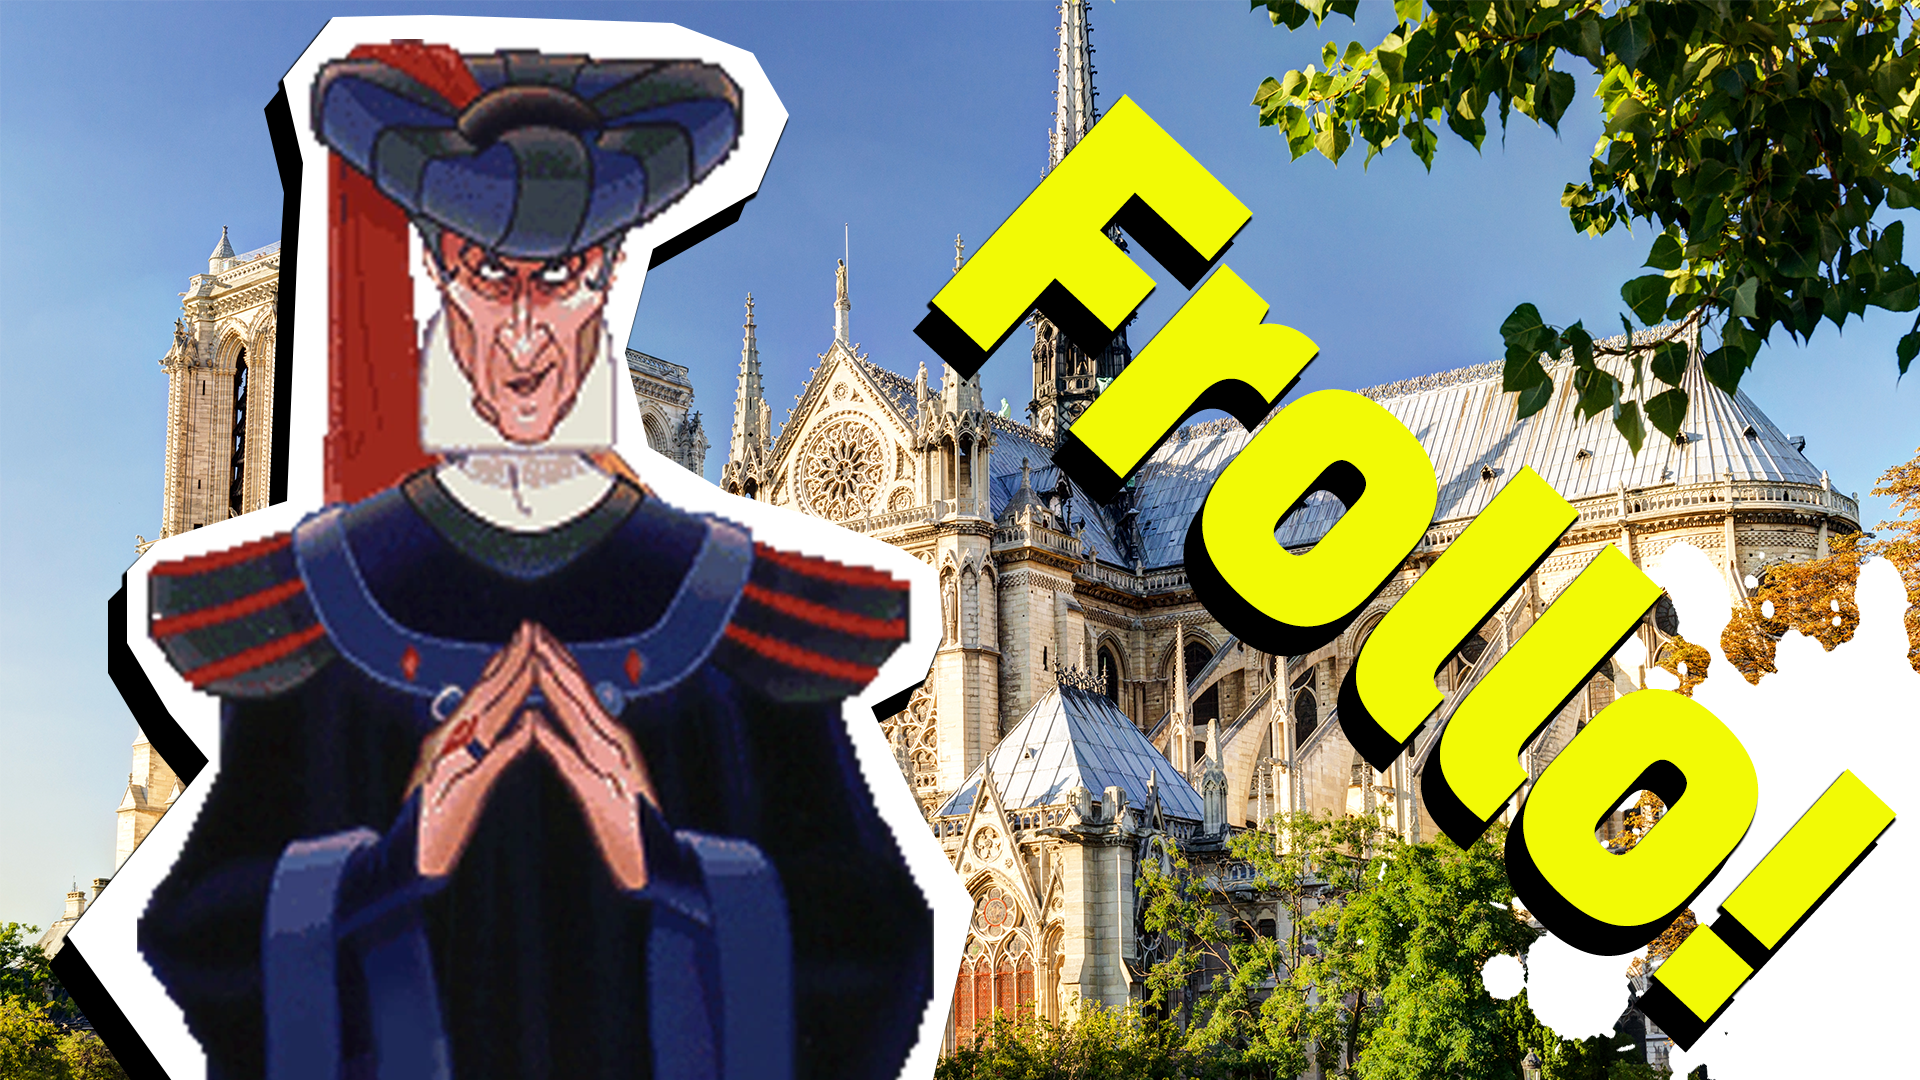 Judge Frollo